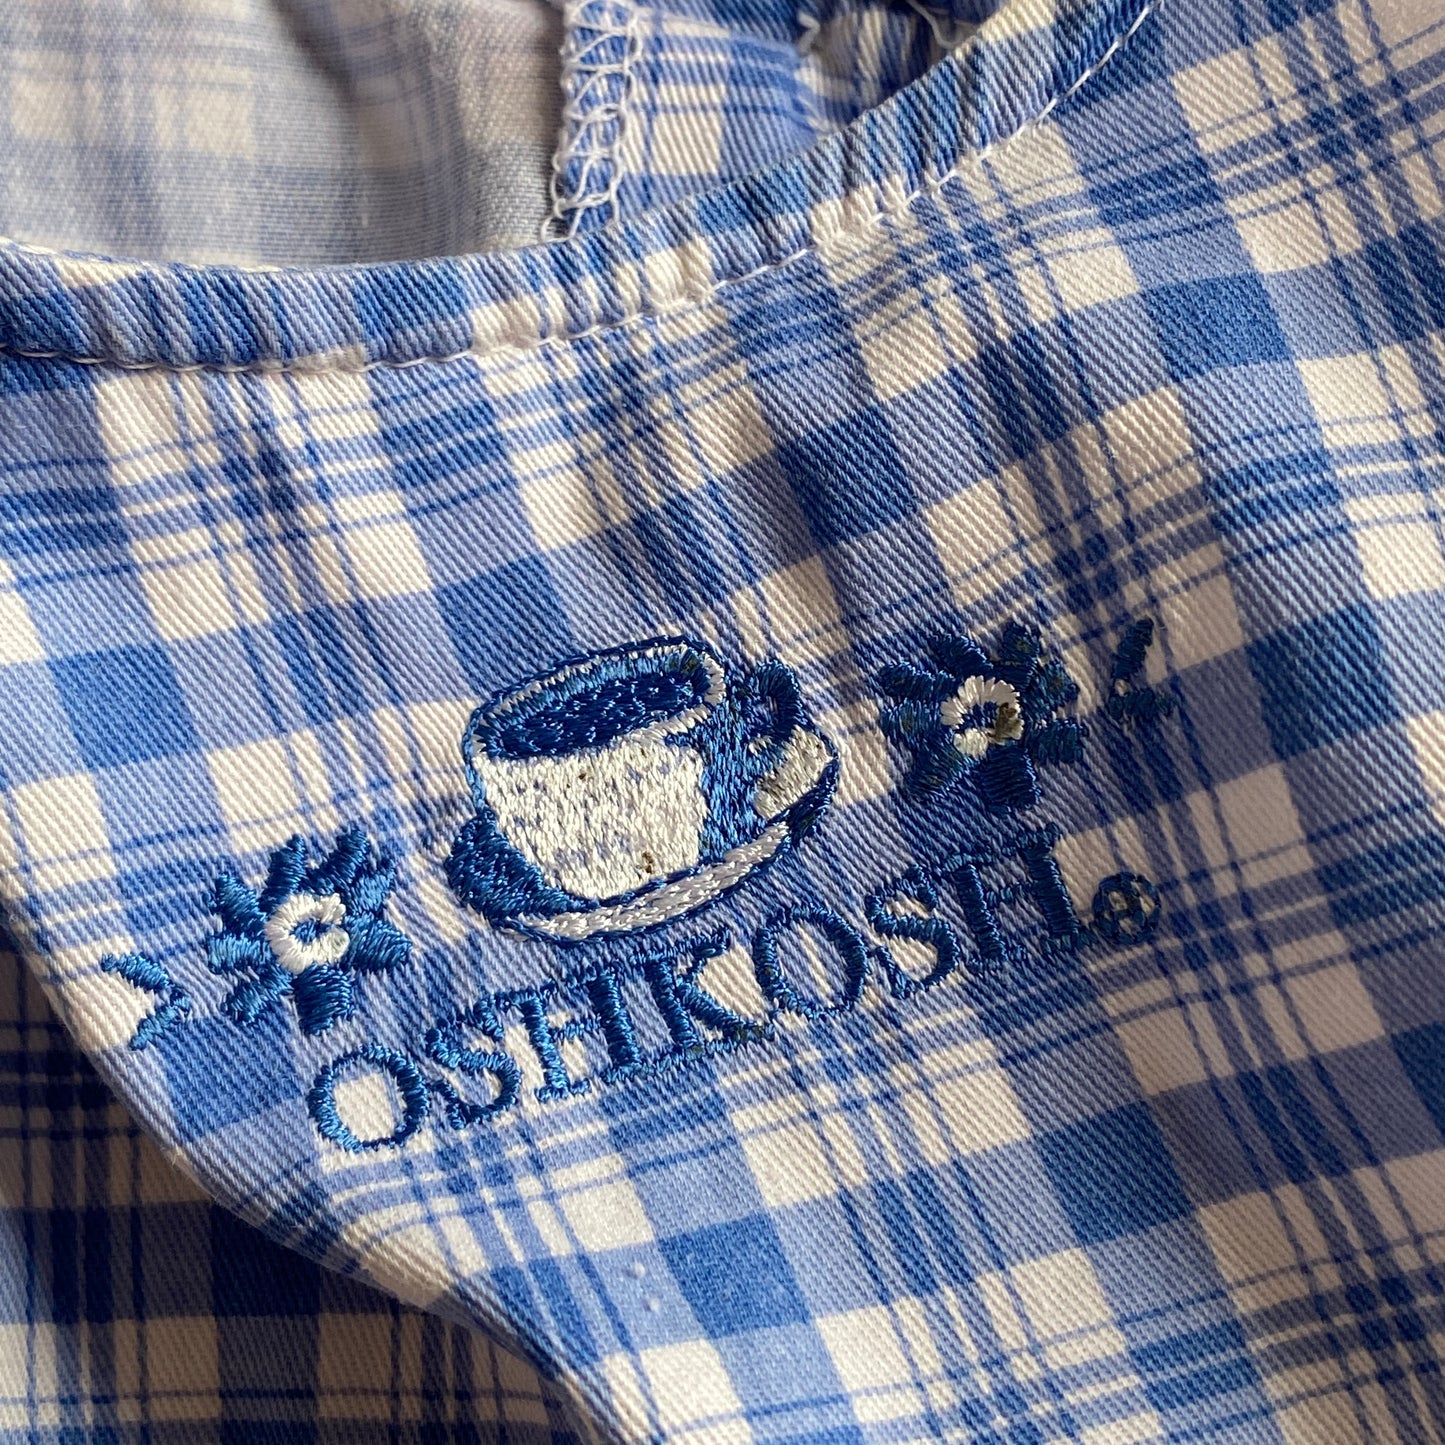 Vintage OshKosh Blue Plaid Tea Cup Dress (5Y)